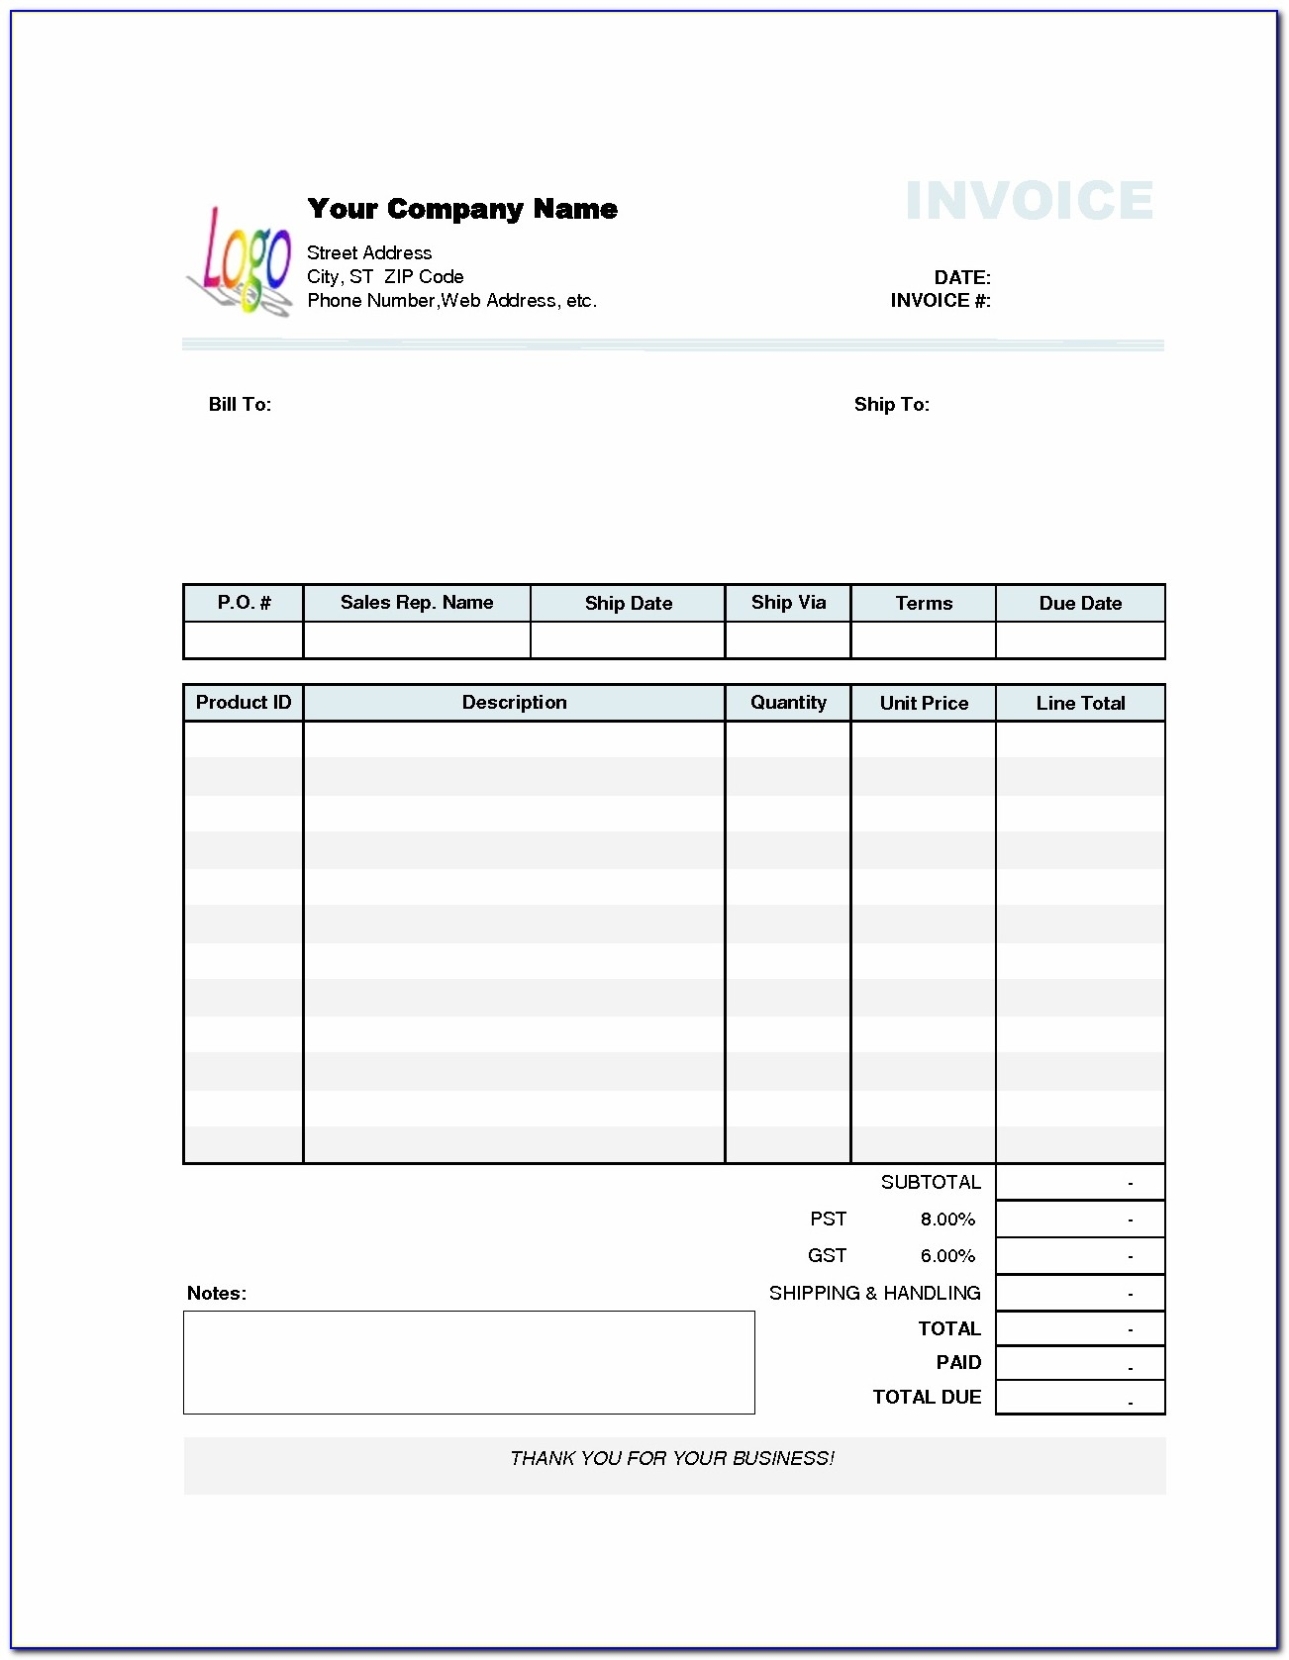 Sample Quickbooks Invoice Template Ideas Excel Simple Free Quickbooks For Quickbooks Invoice Template Excel